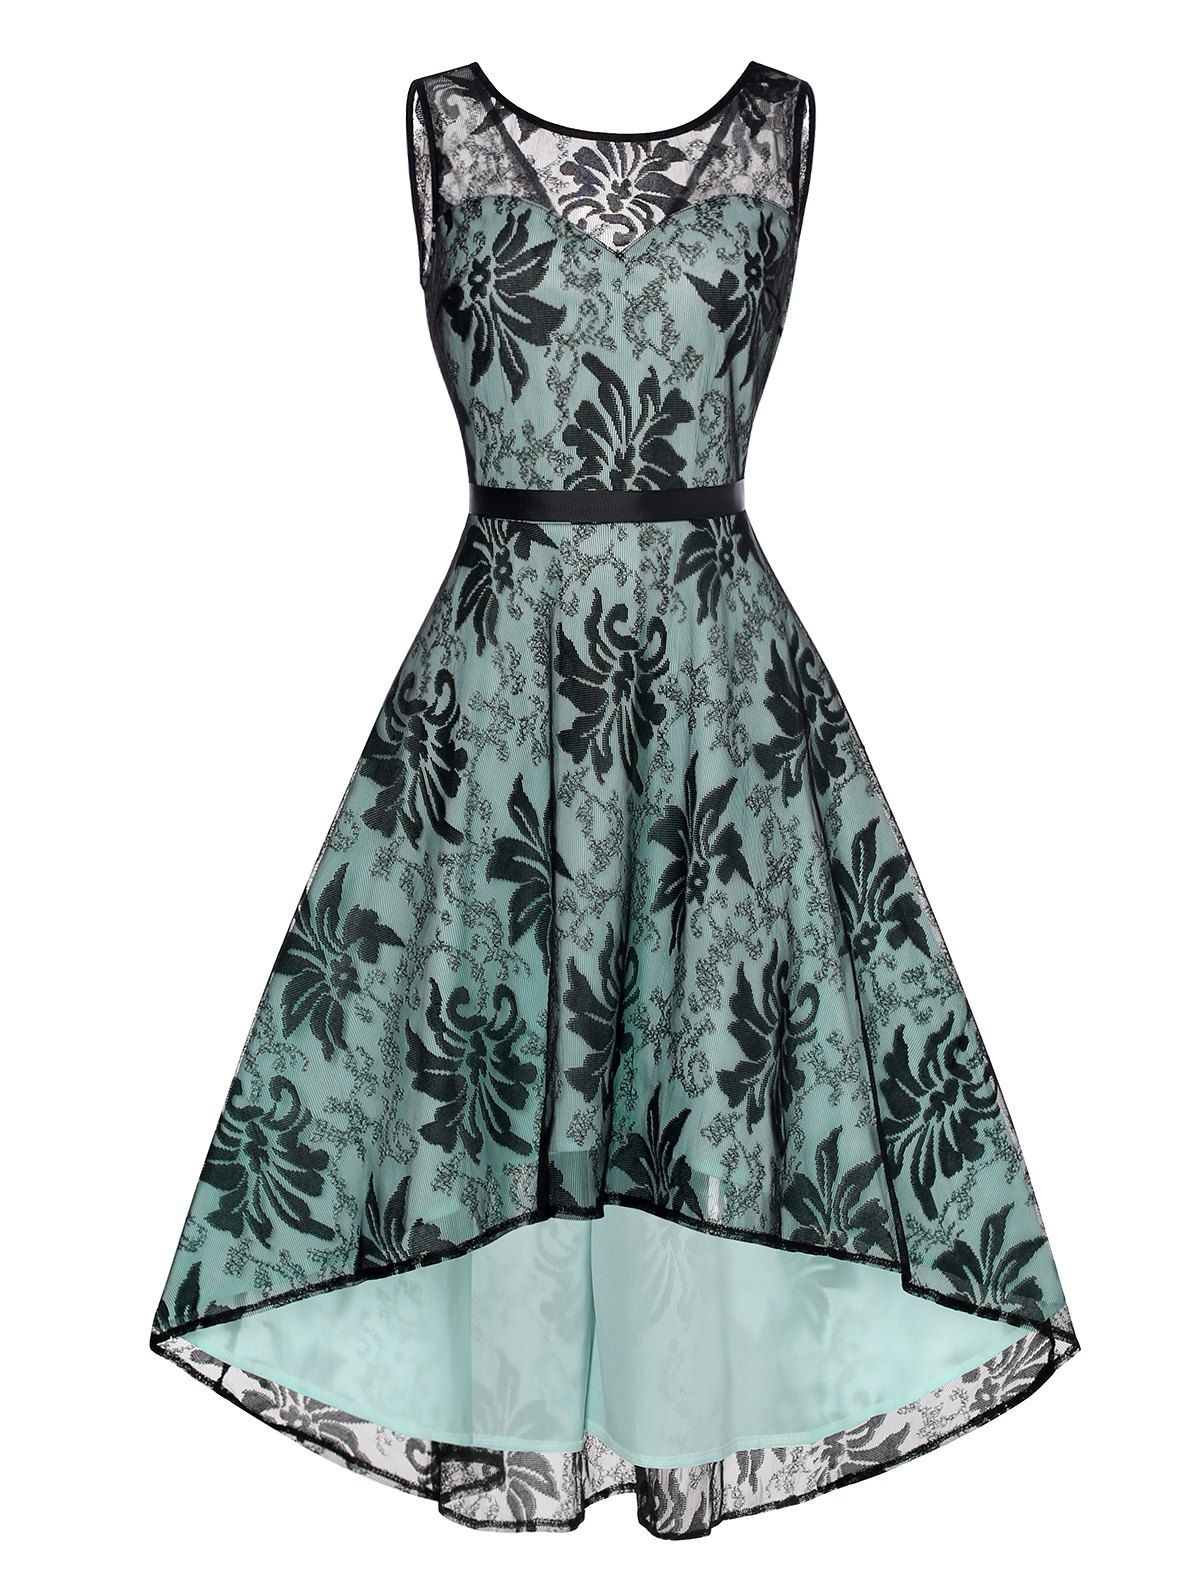 Vacation Floral Lace Overlay Midi Summer Dress Sleeveless High Waist High Low Dress - LIGHT GREEN L